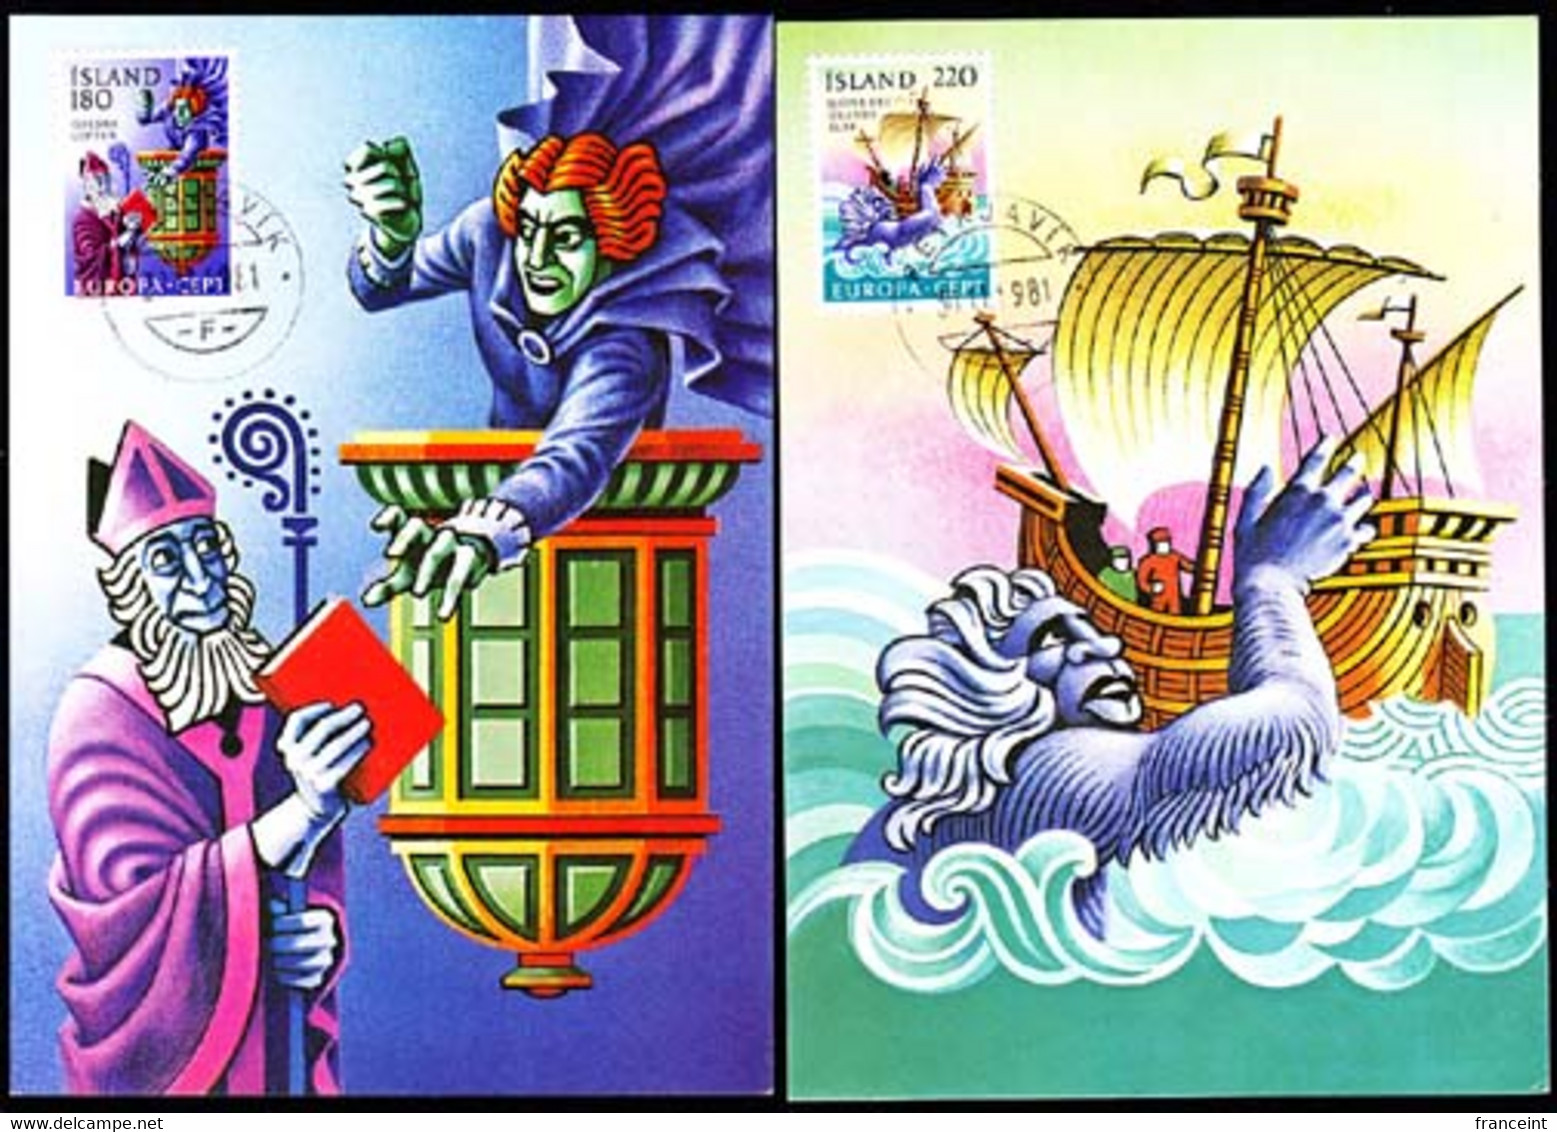 ICELAND (1981) Luftur The Sorcerer. Sea Witch. Set Of 2 Maximum Cards. Scott Nos 541-2, Yvert Nos 518-9 - Maximumkarten